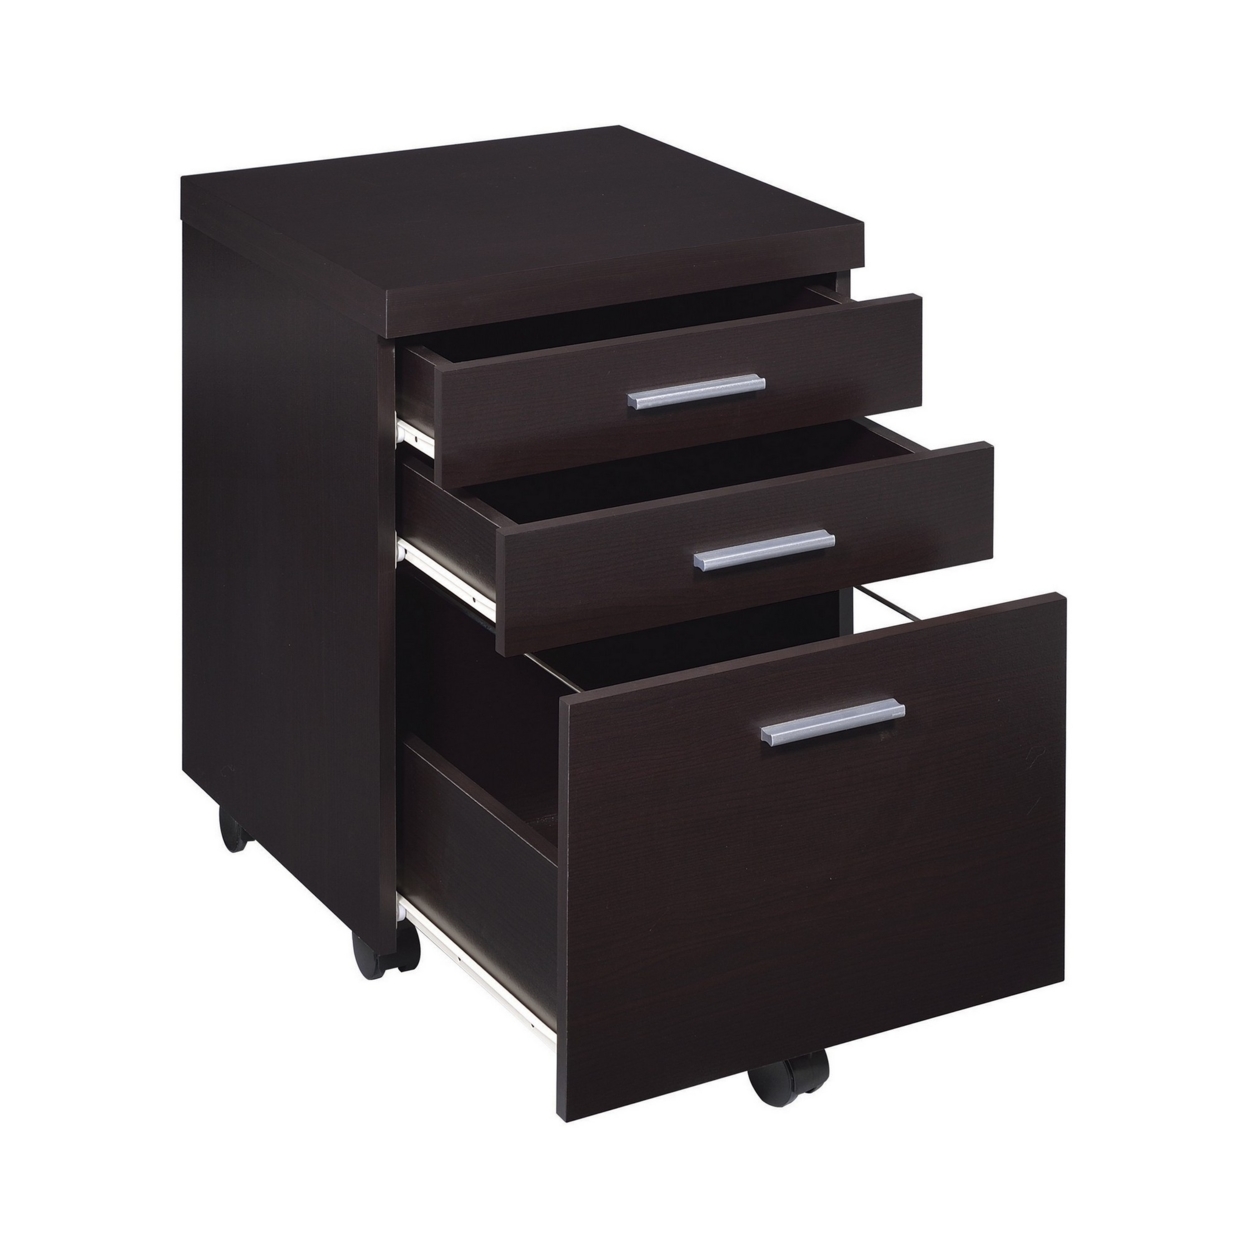 26 Inch 3 Drawer Mobile File Cabinet, Smooth Caster Wheels, Dark Cappuccino- Saltoro Sherpi